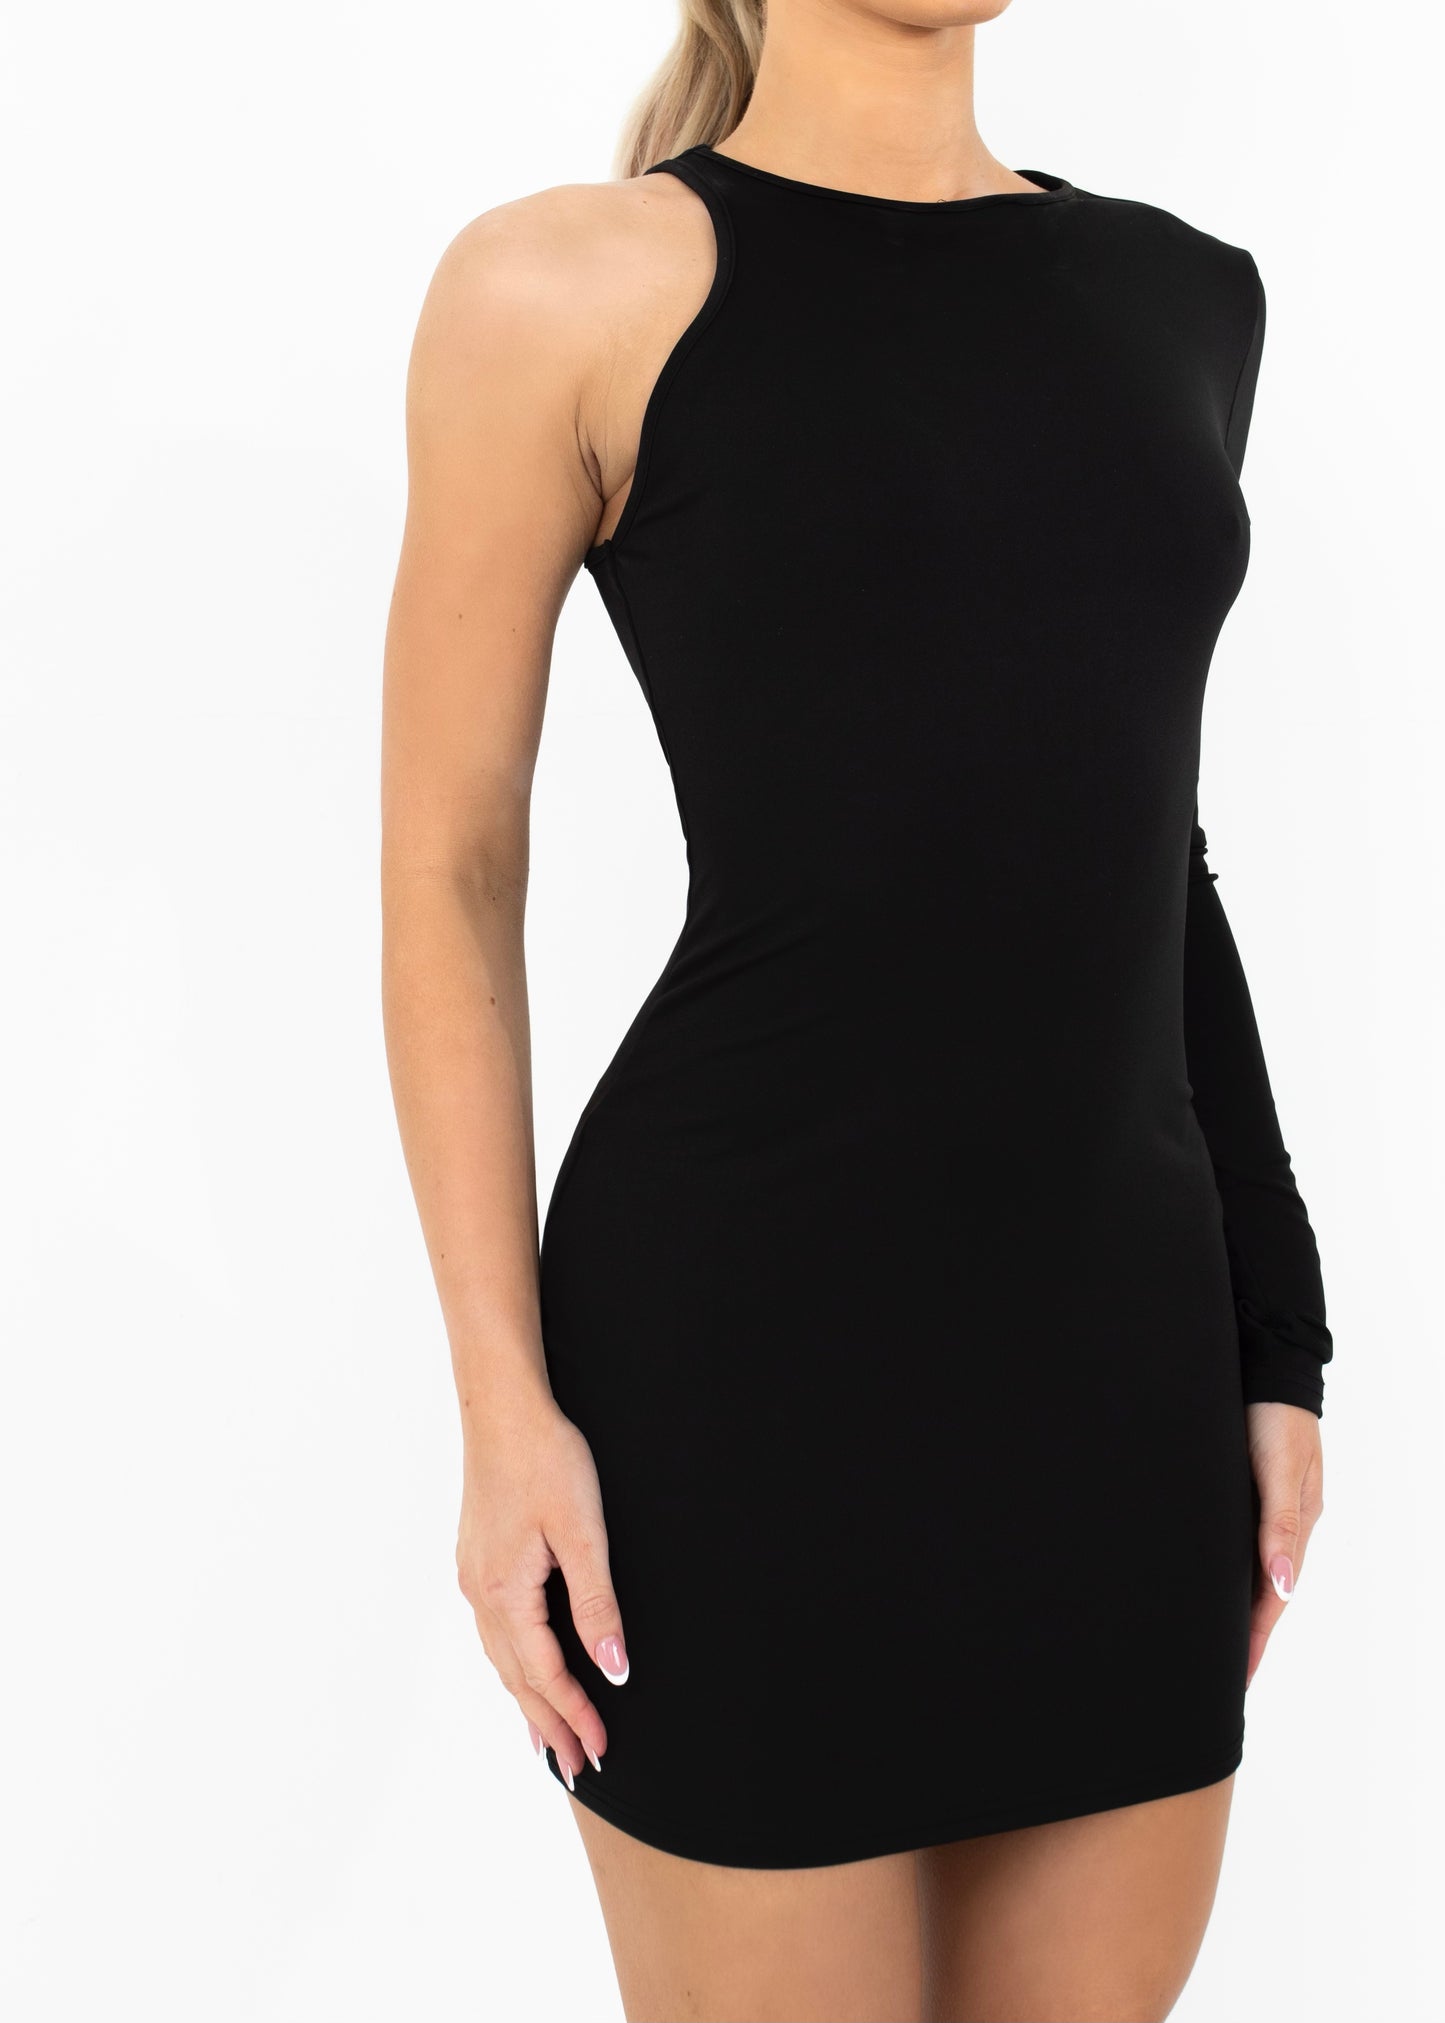 JASMIN - Black One Sleeve Mini Dress